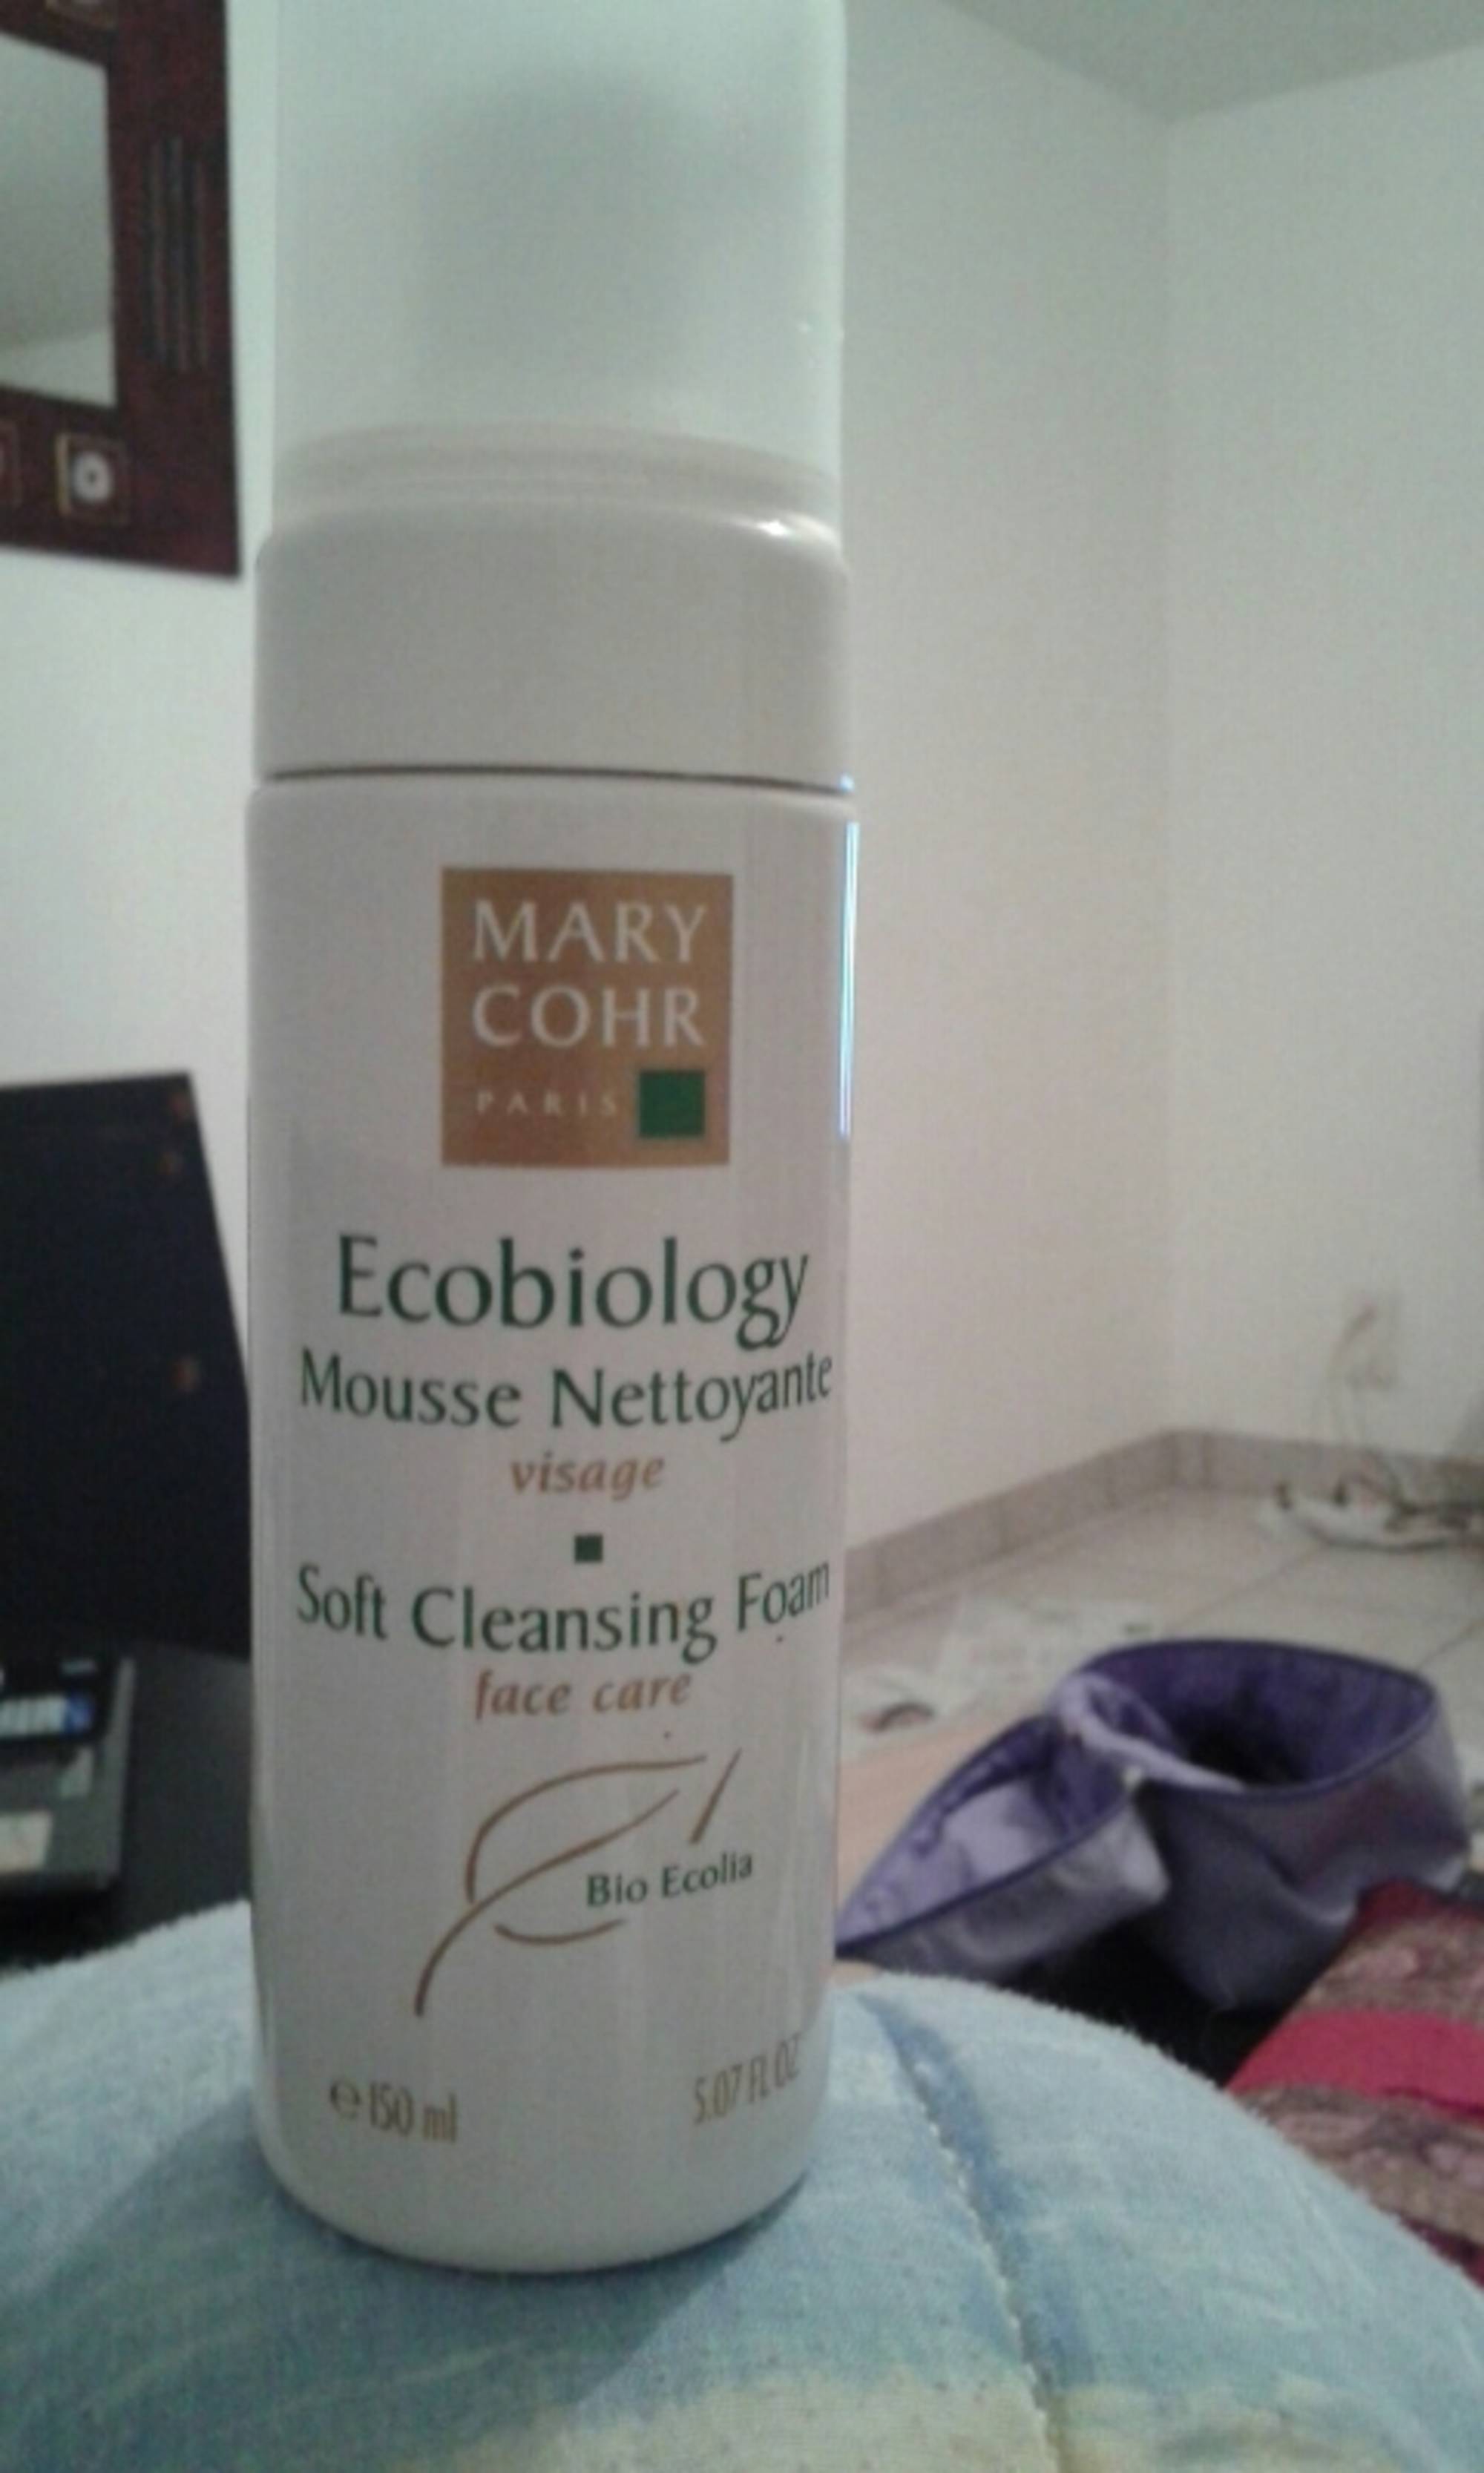 MARY COHR - Ecobiology - Mousse nettoyante visage